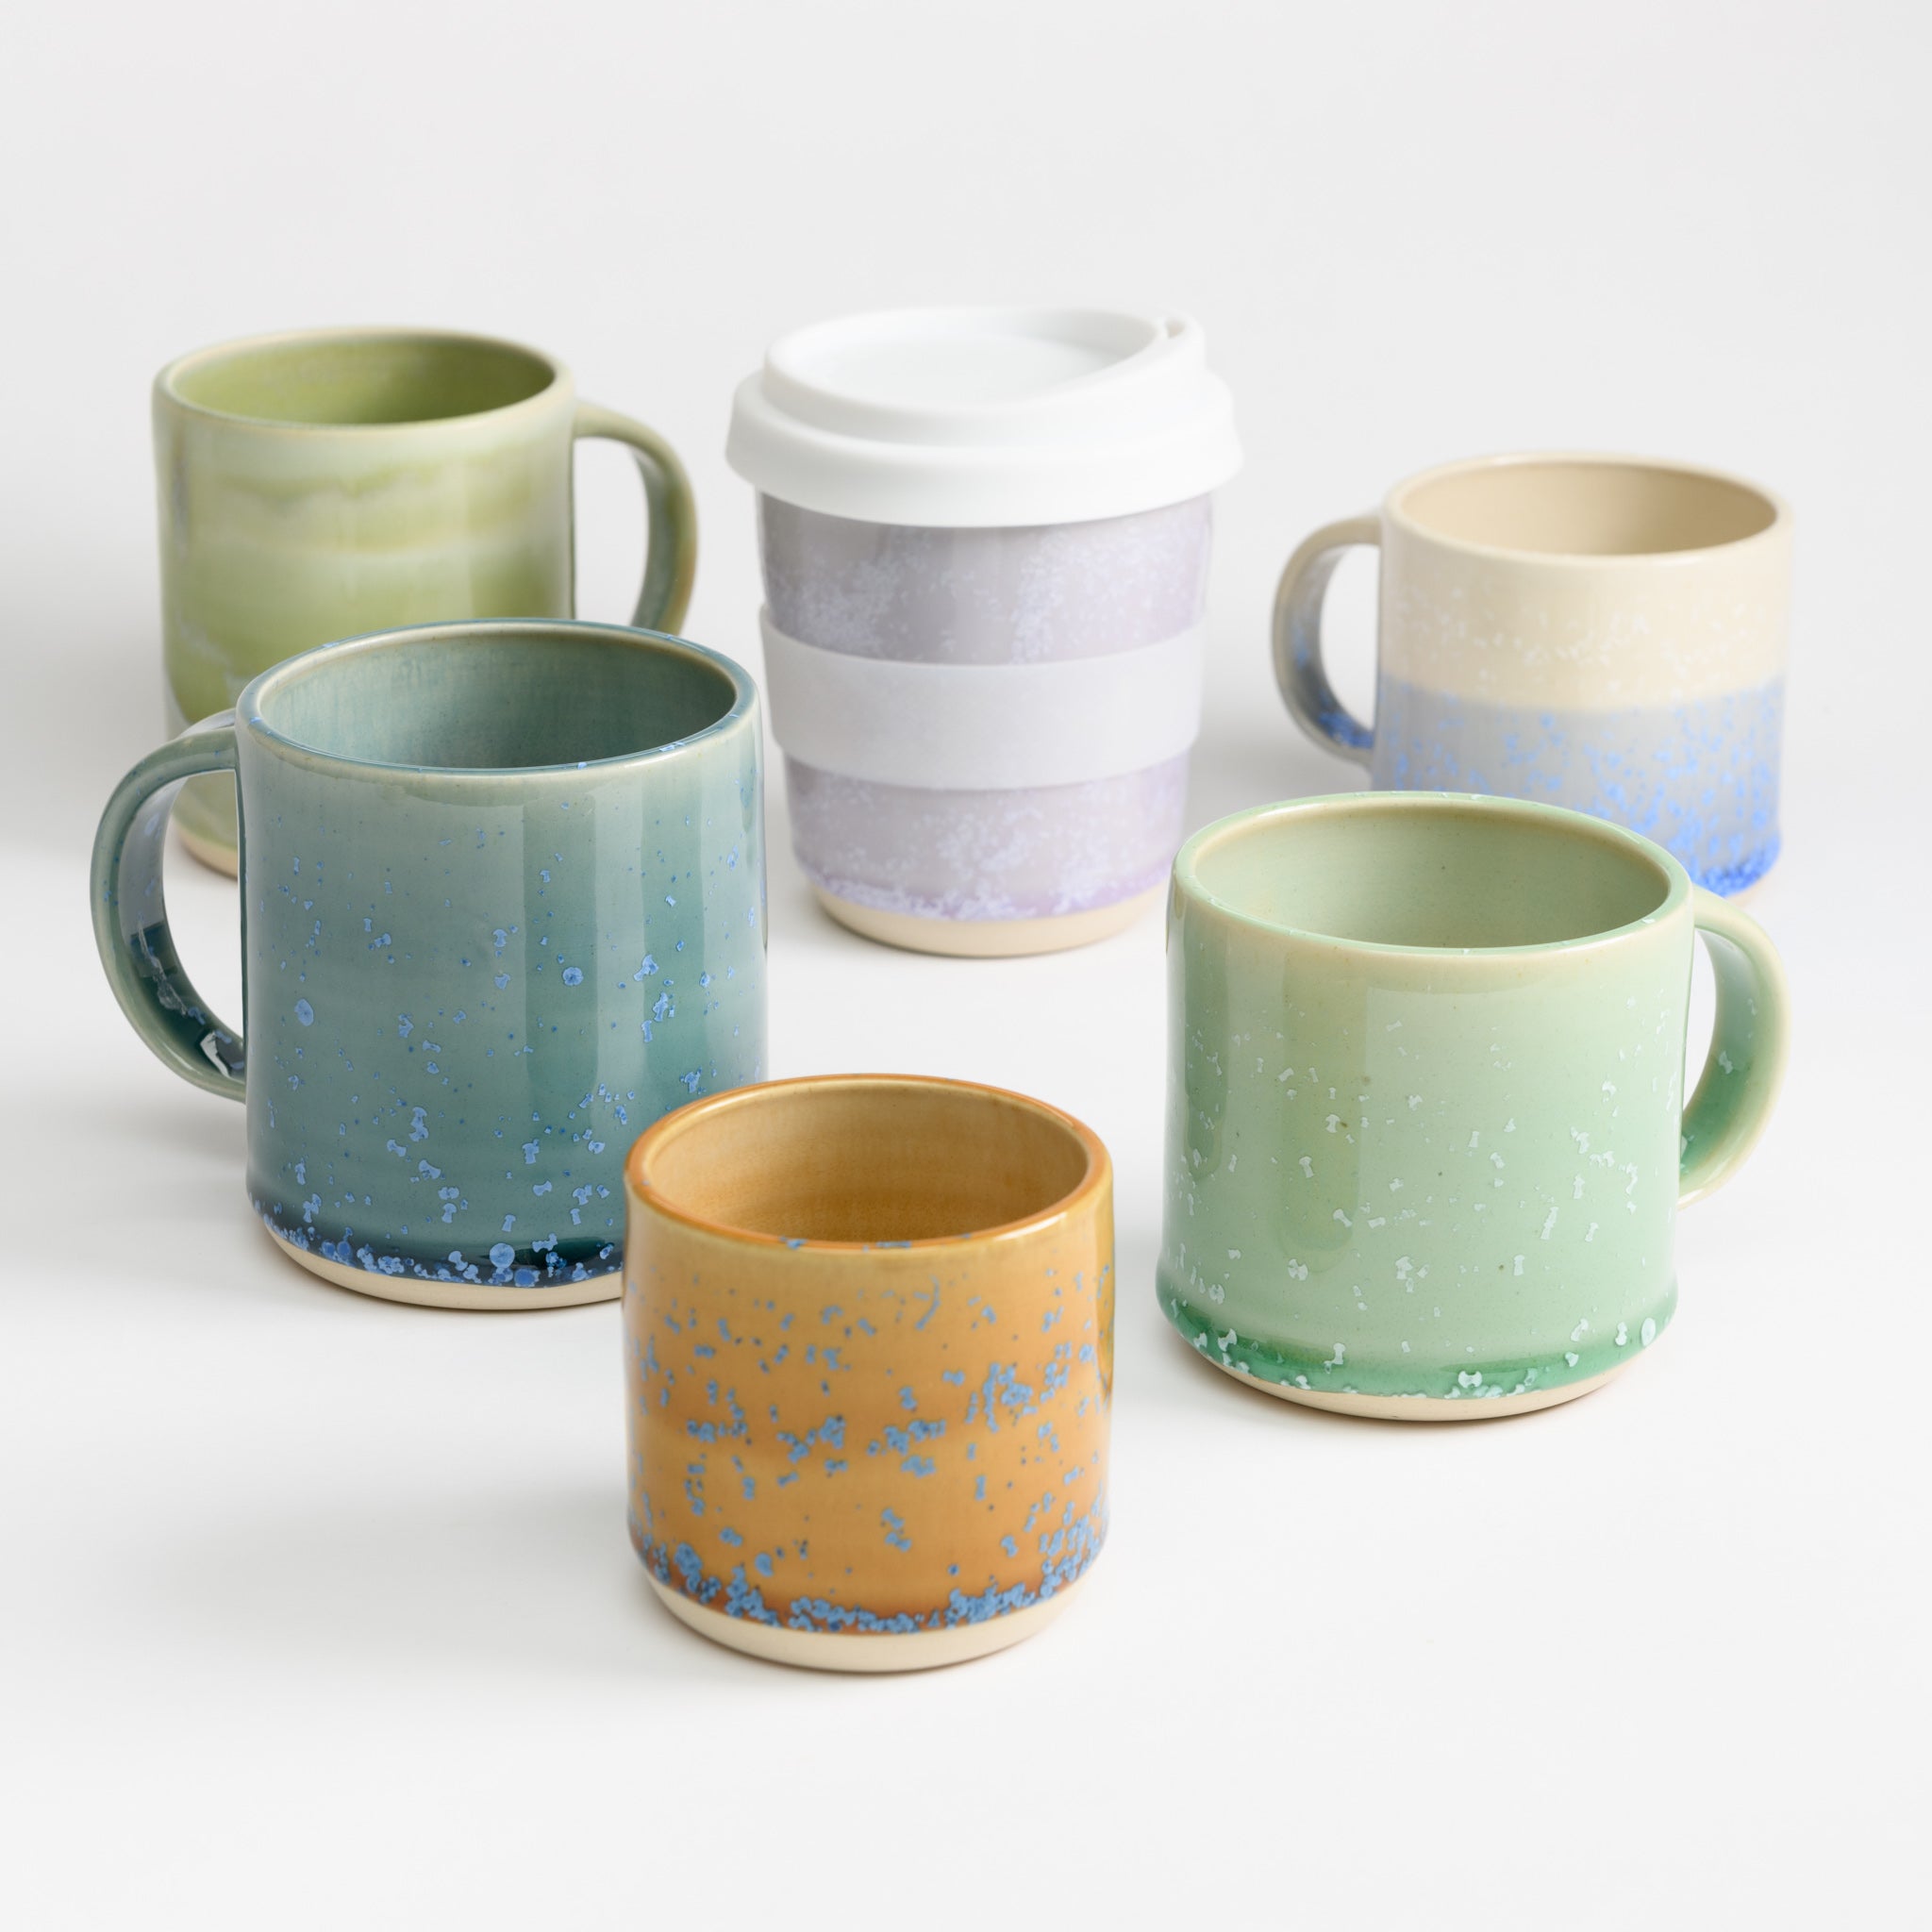 Pretty handmade ceramic mugs and cups in beautiful colours